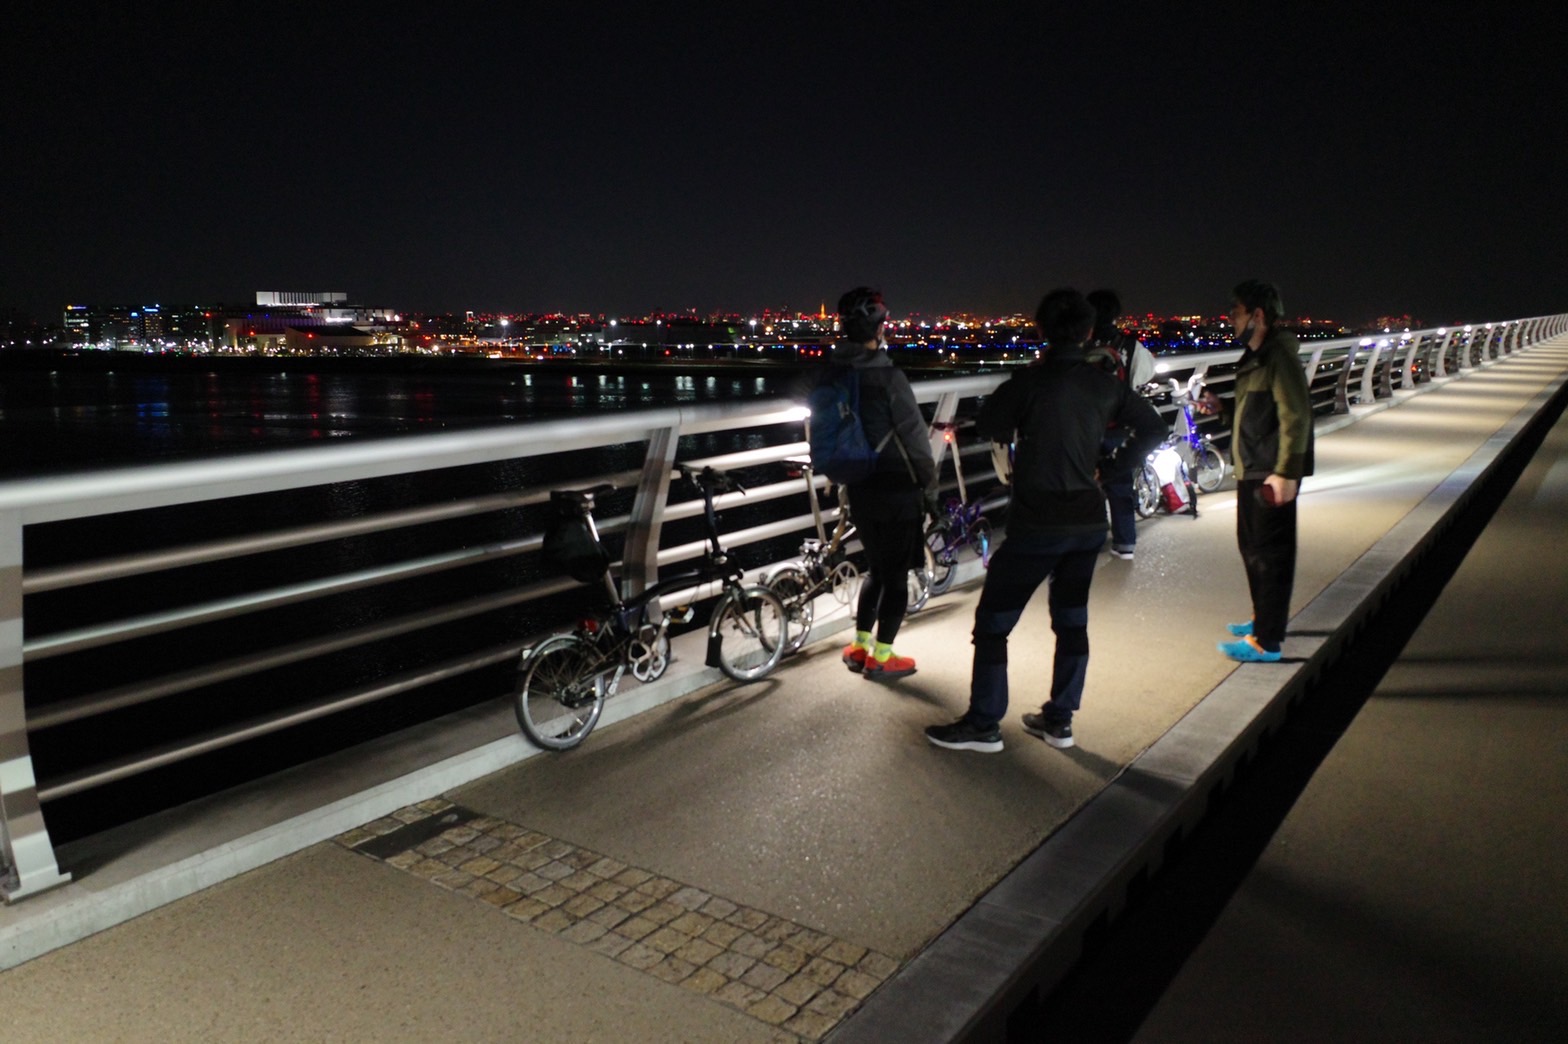 【BROMPTON】川崎浮島工場夜景ライド&個人的に感じた注意点 | 上野、御徒町で自転車をお探しならY's Road 上野本館